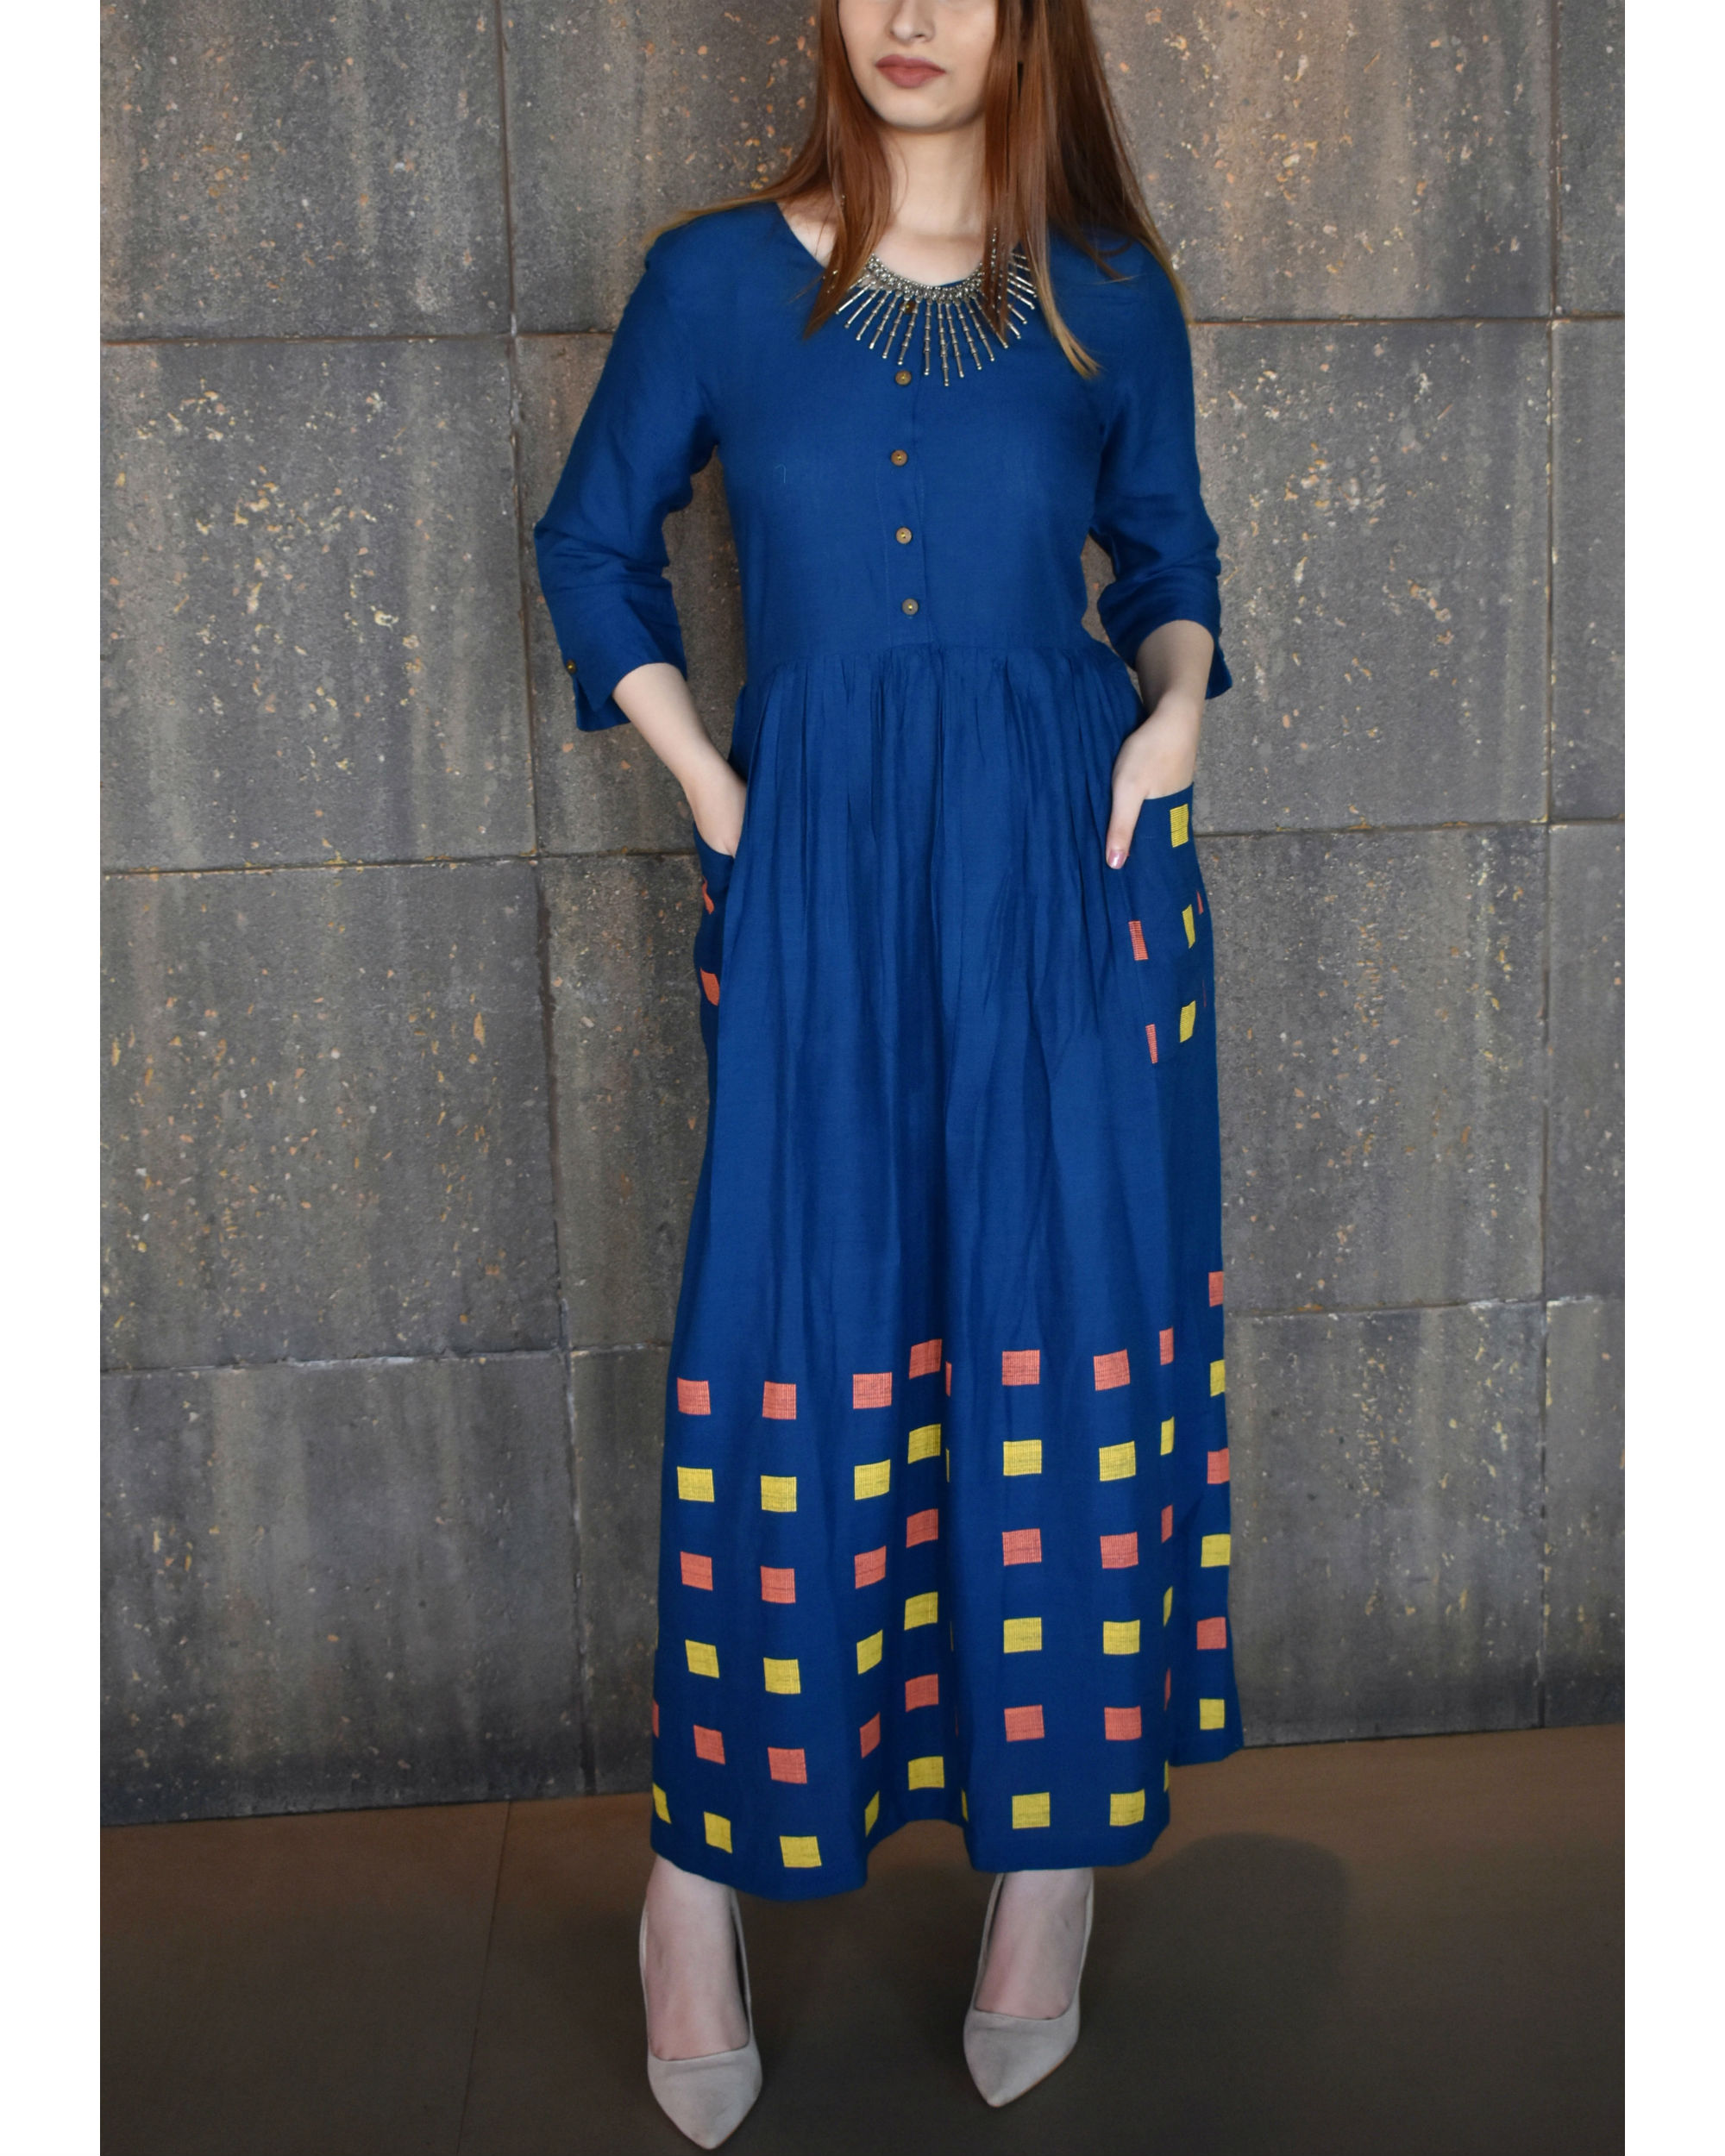 Blue geometric print dress by Dorii | The Secret Label